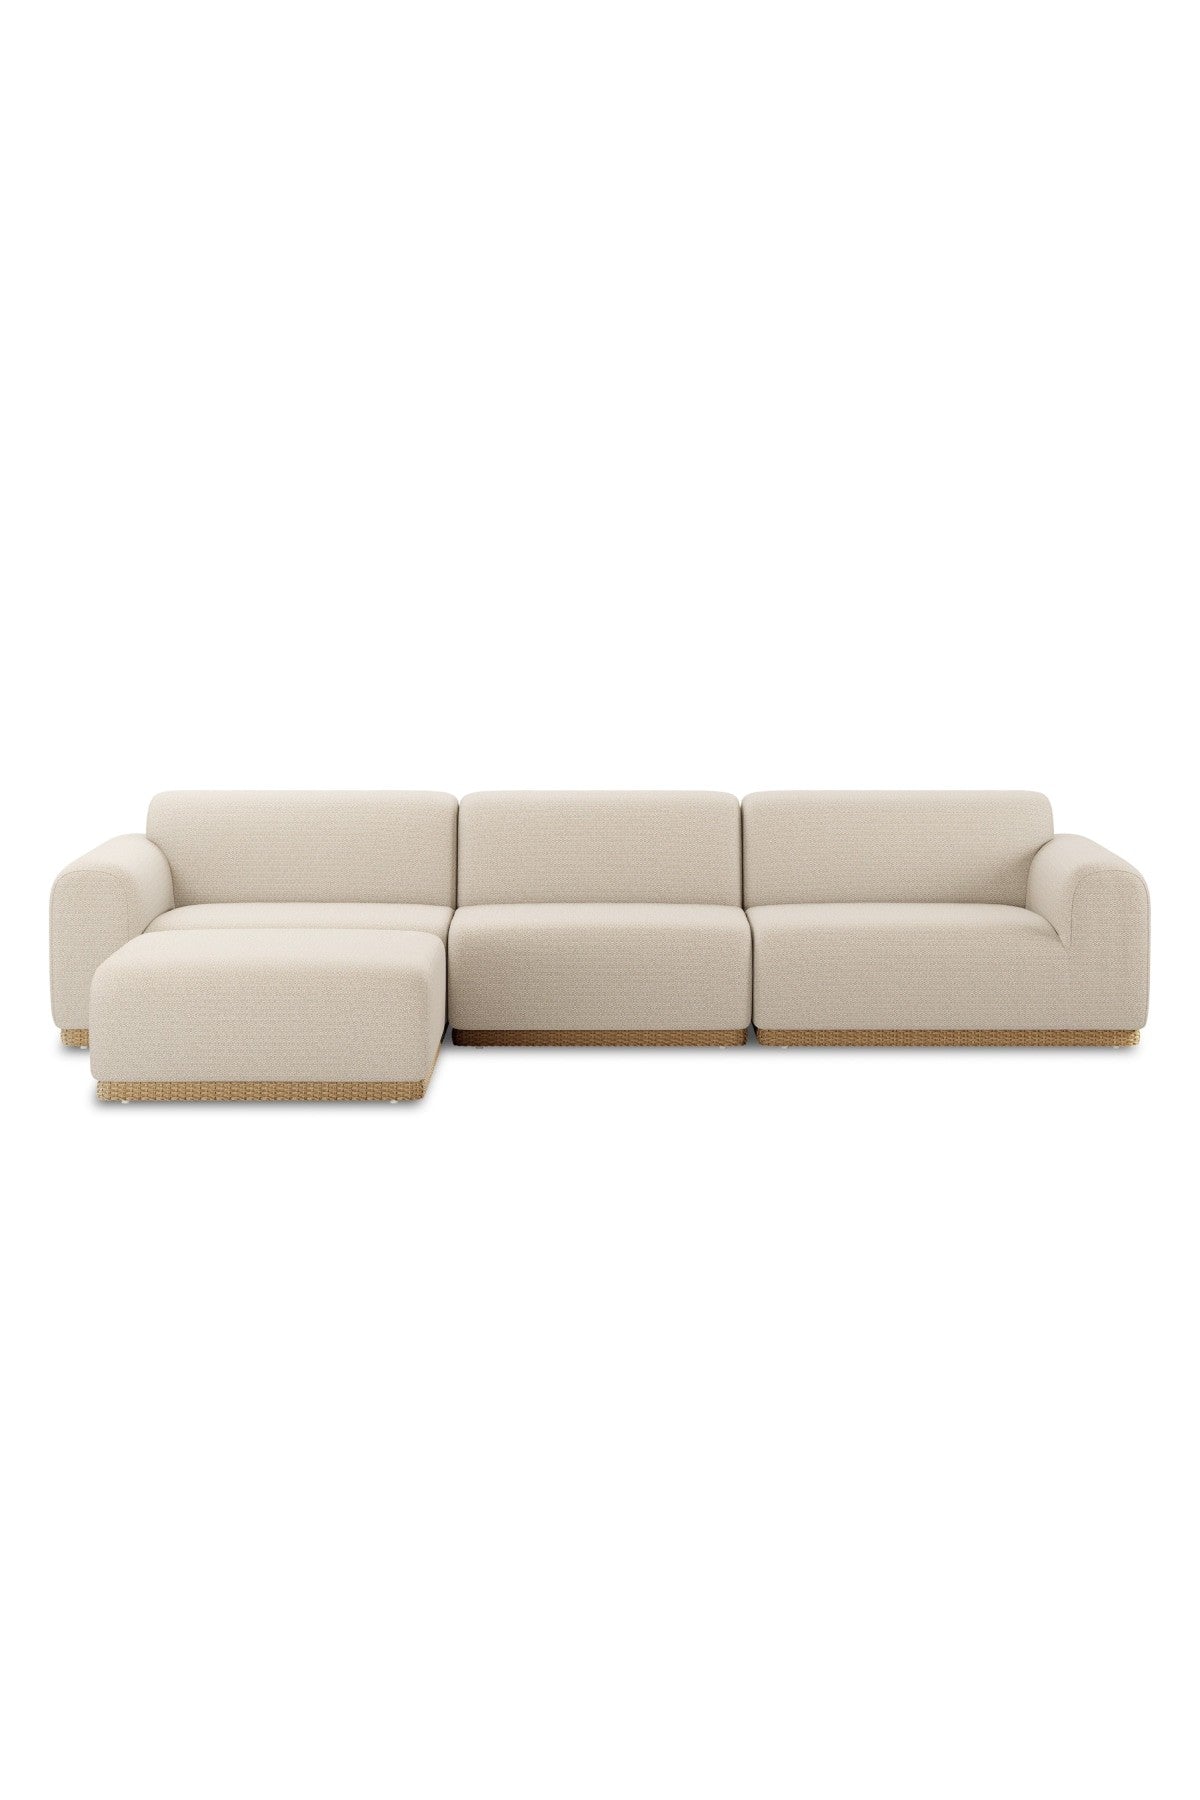 Romley Outdoor 3-Piece Sofa/Sectional